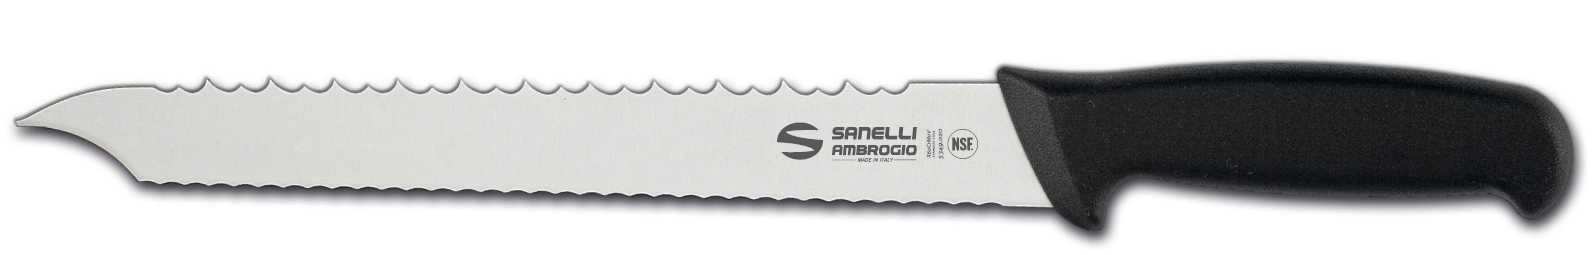 S355.026 SUPRA KNIFE FOR FROZEN FOOD 26CM LAMA SANELLI AMBROGIO